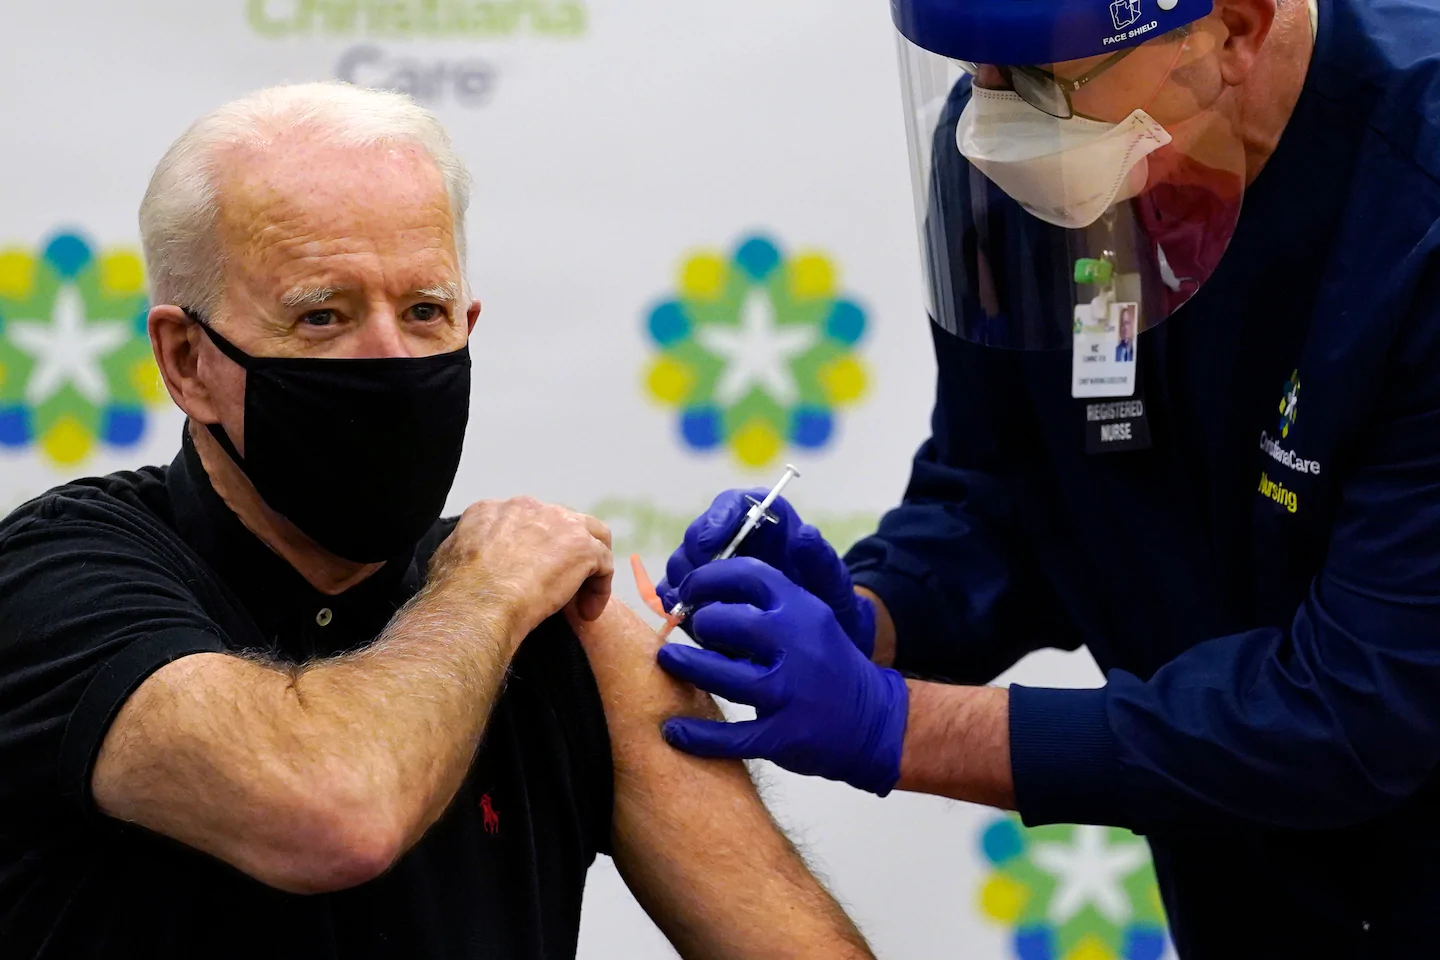  Biden team sees risks in Trump decision to widen vaccine pool